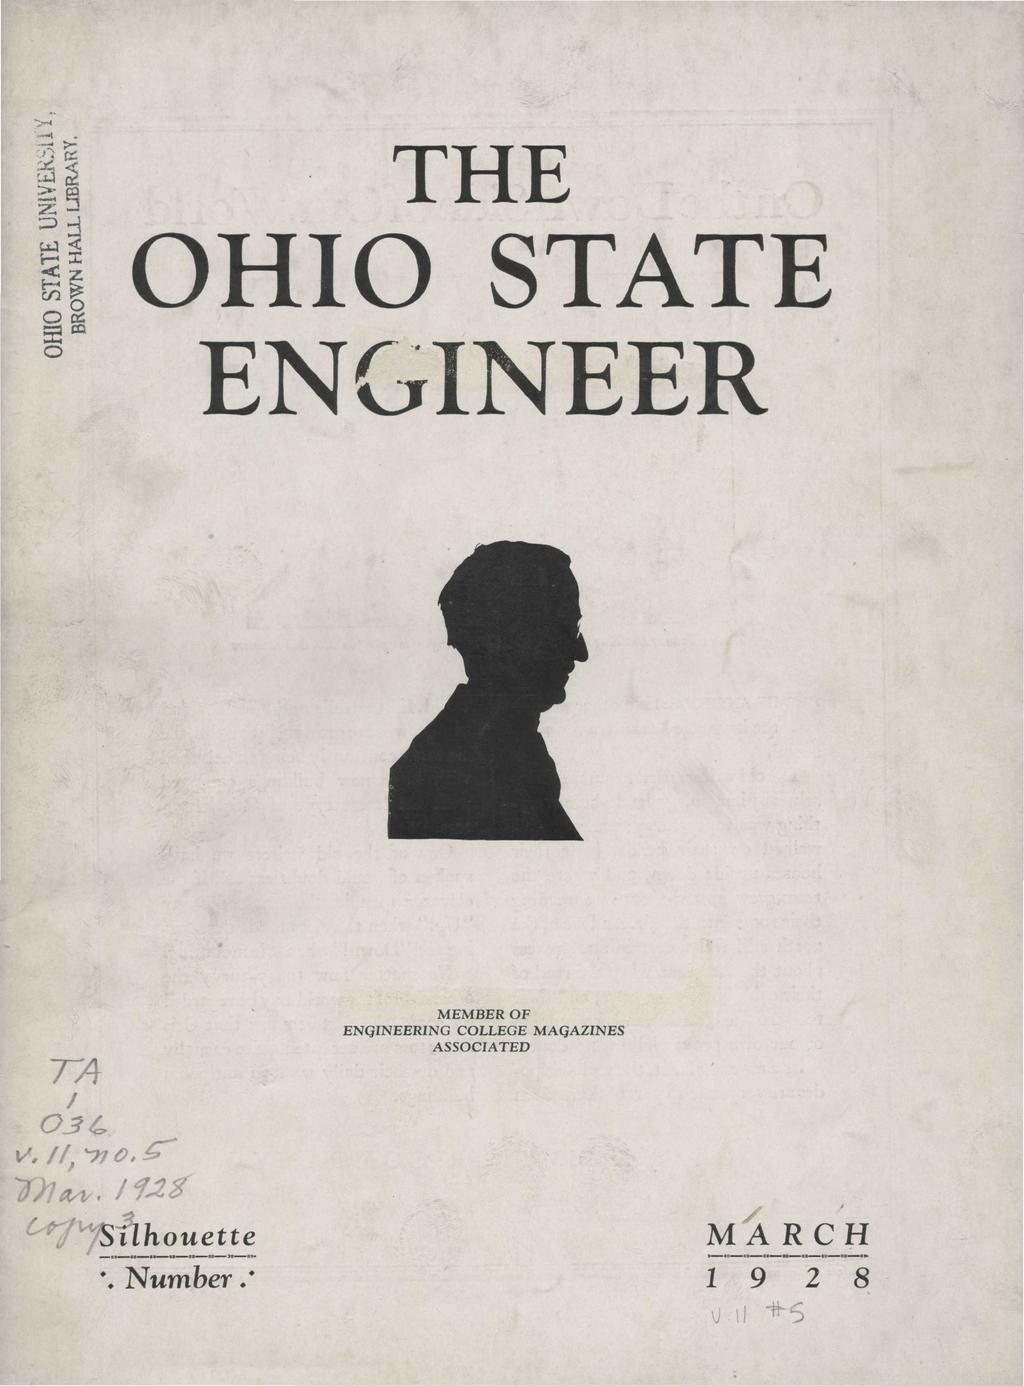 THE OHIO STATE ENGINEER MEMBER OF ENGINEERING